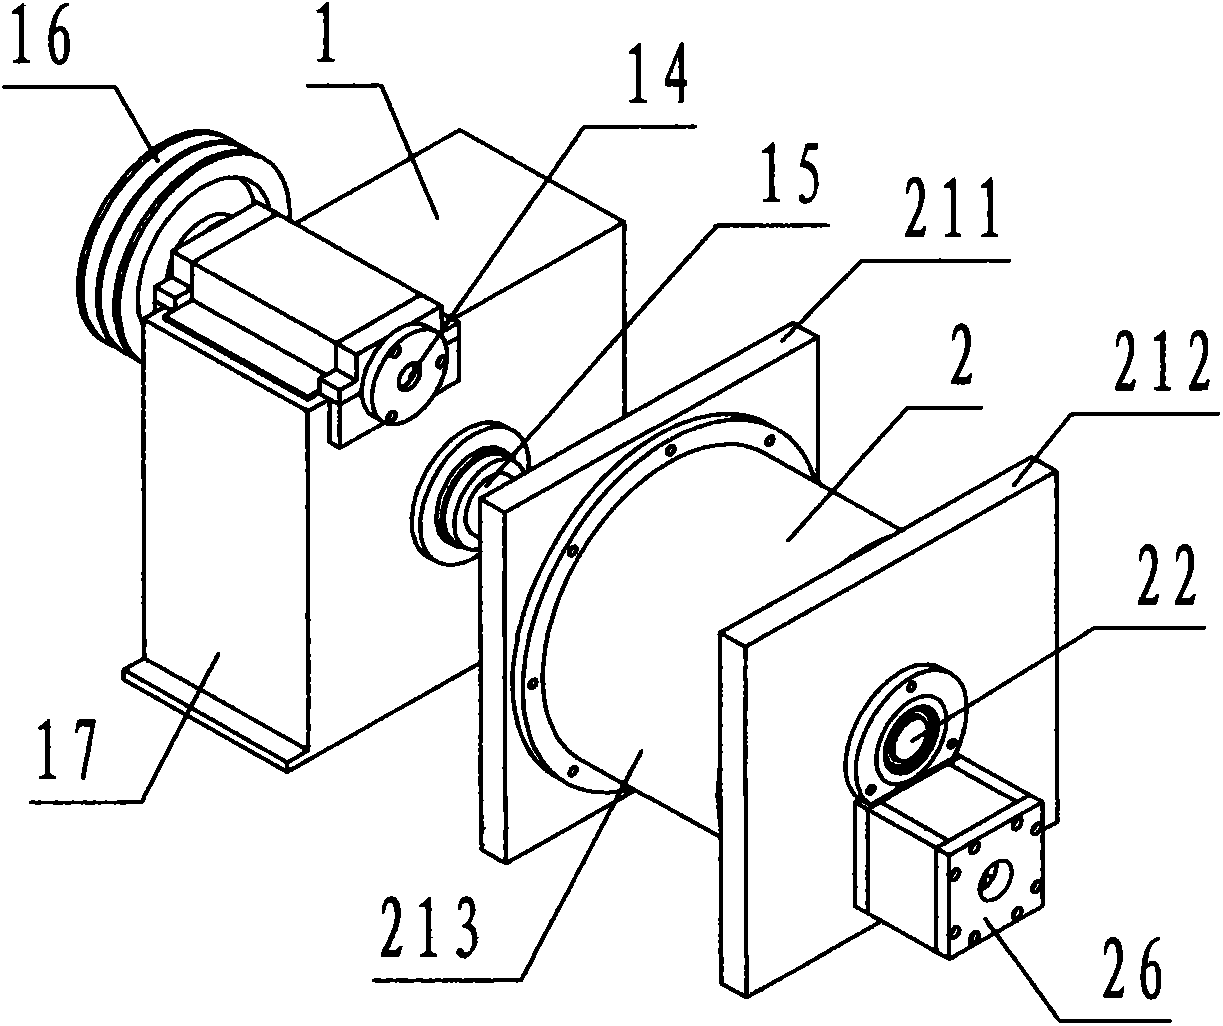 Fan-pendulum-type high-pressure blower